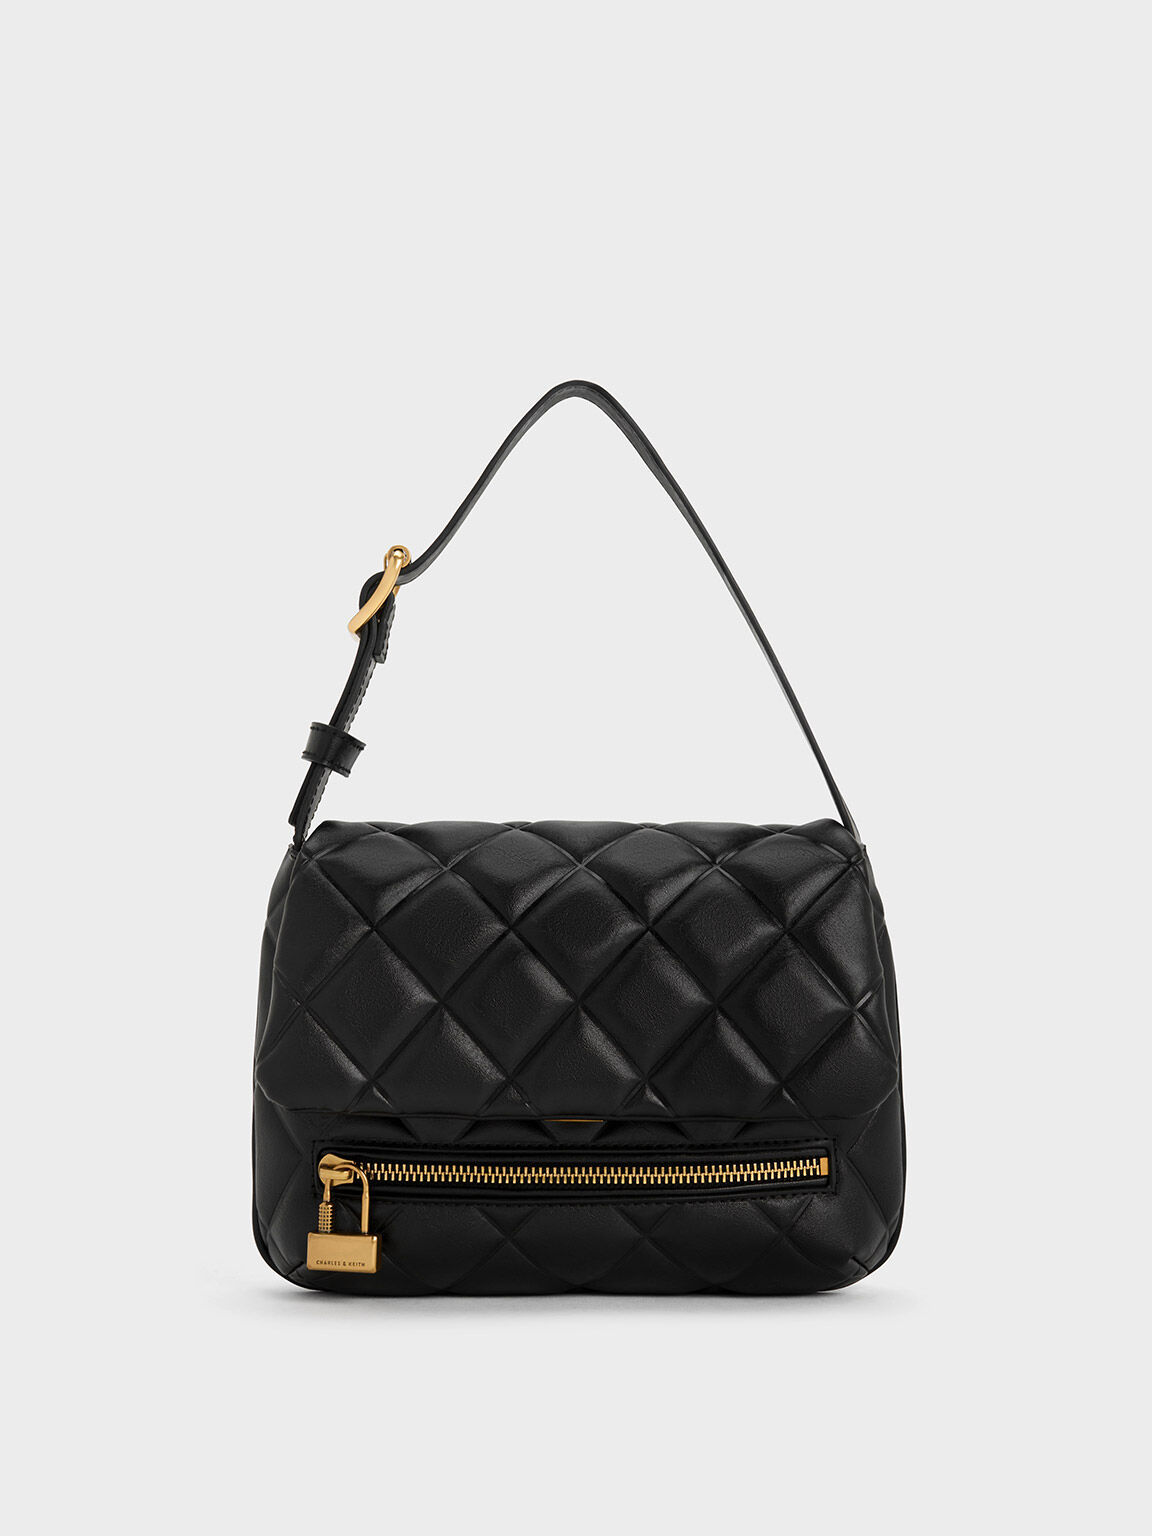 GUCCI CAMERA BAG CROSSBODY - Styles/Sizes Available | Gucci crossbody bag,  Bags, Gucci bag